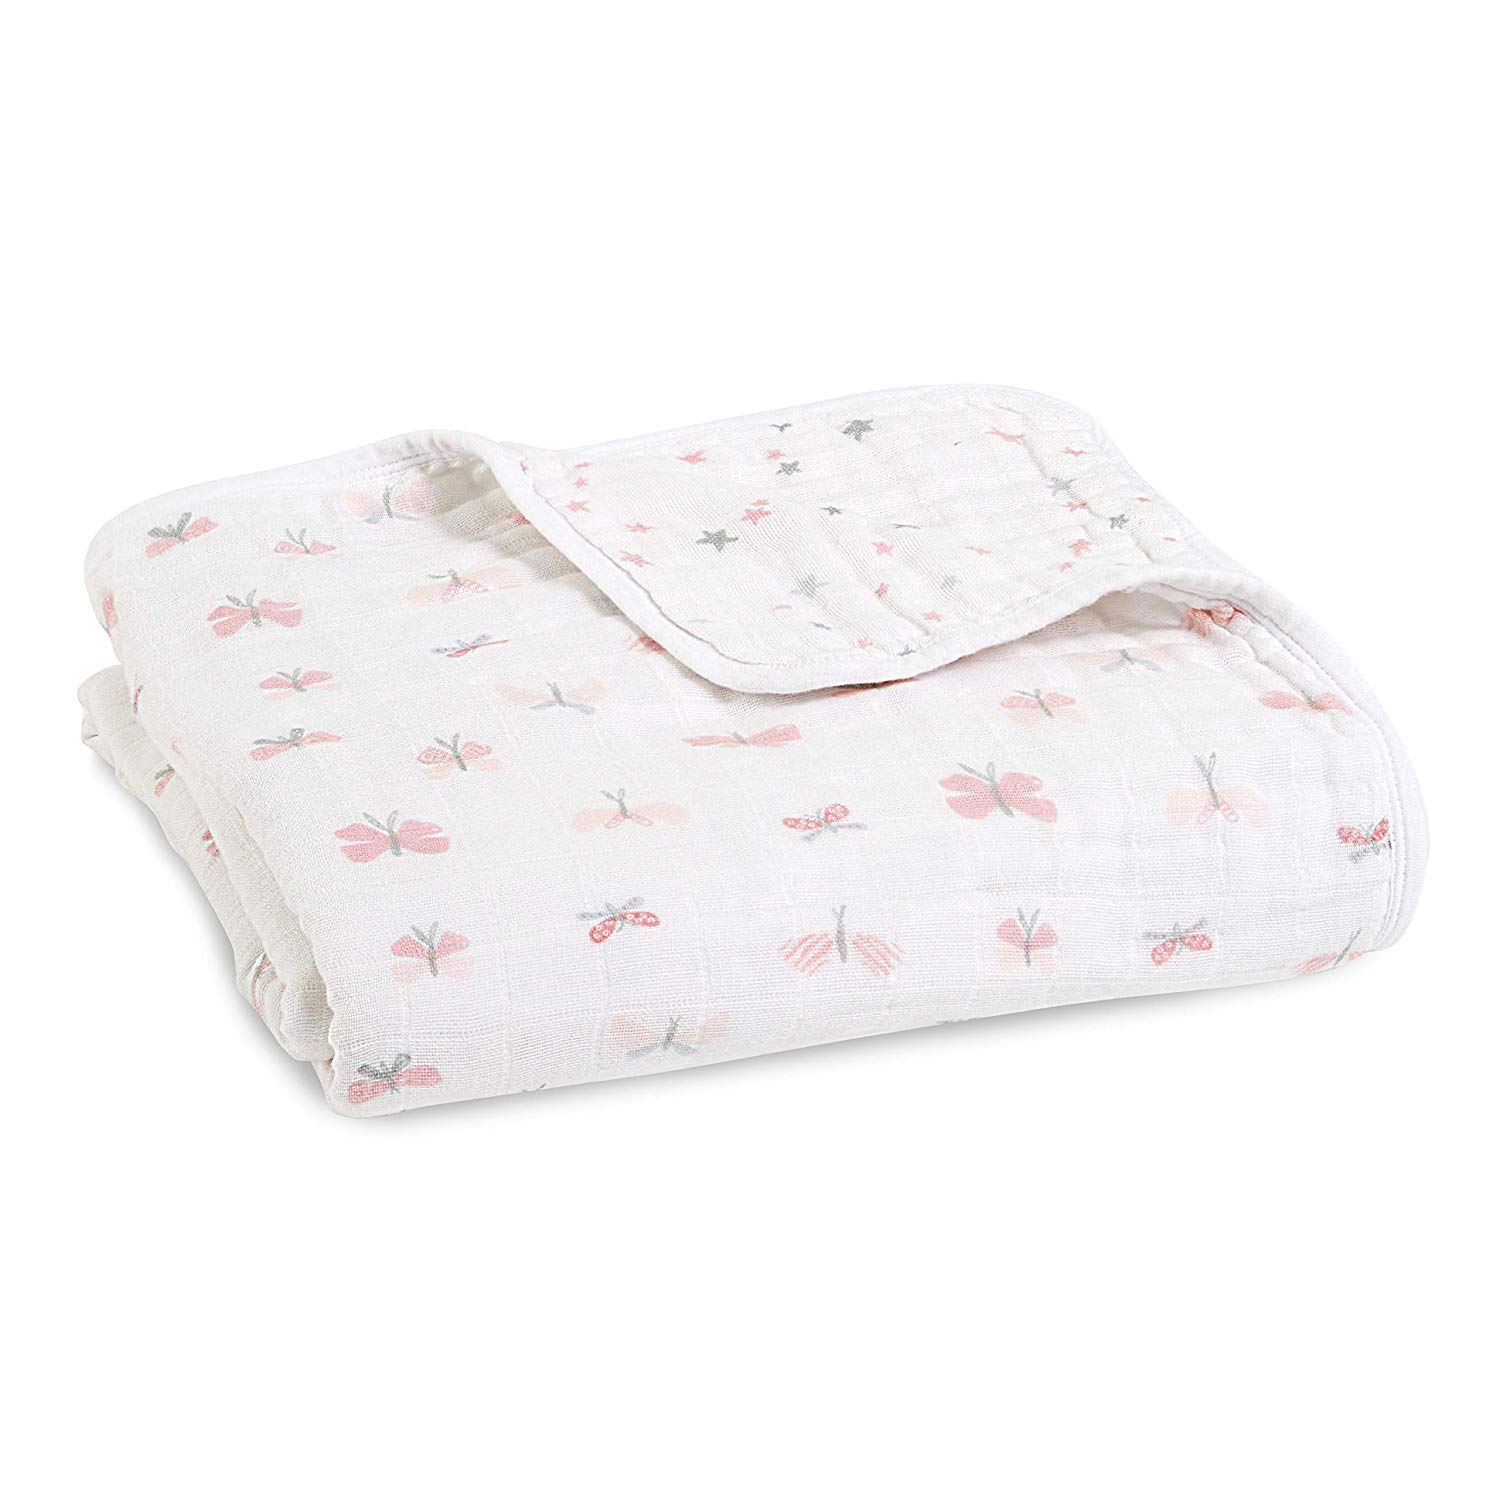 aden + anais Dream Blanket, 4 Layers 100% Cotton Muslin, 120 cm x 120 cm, Lovely Reverie